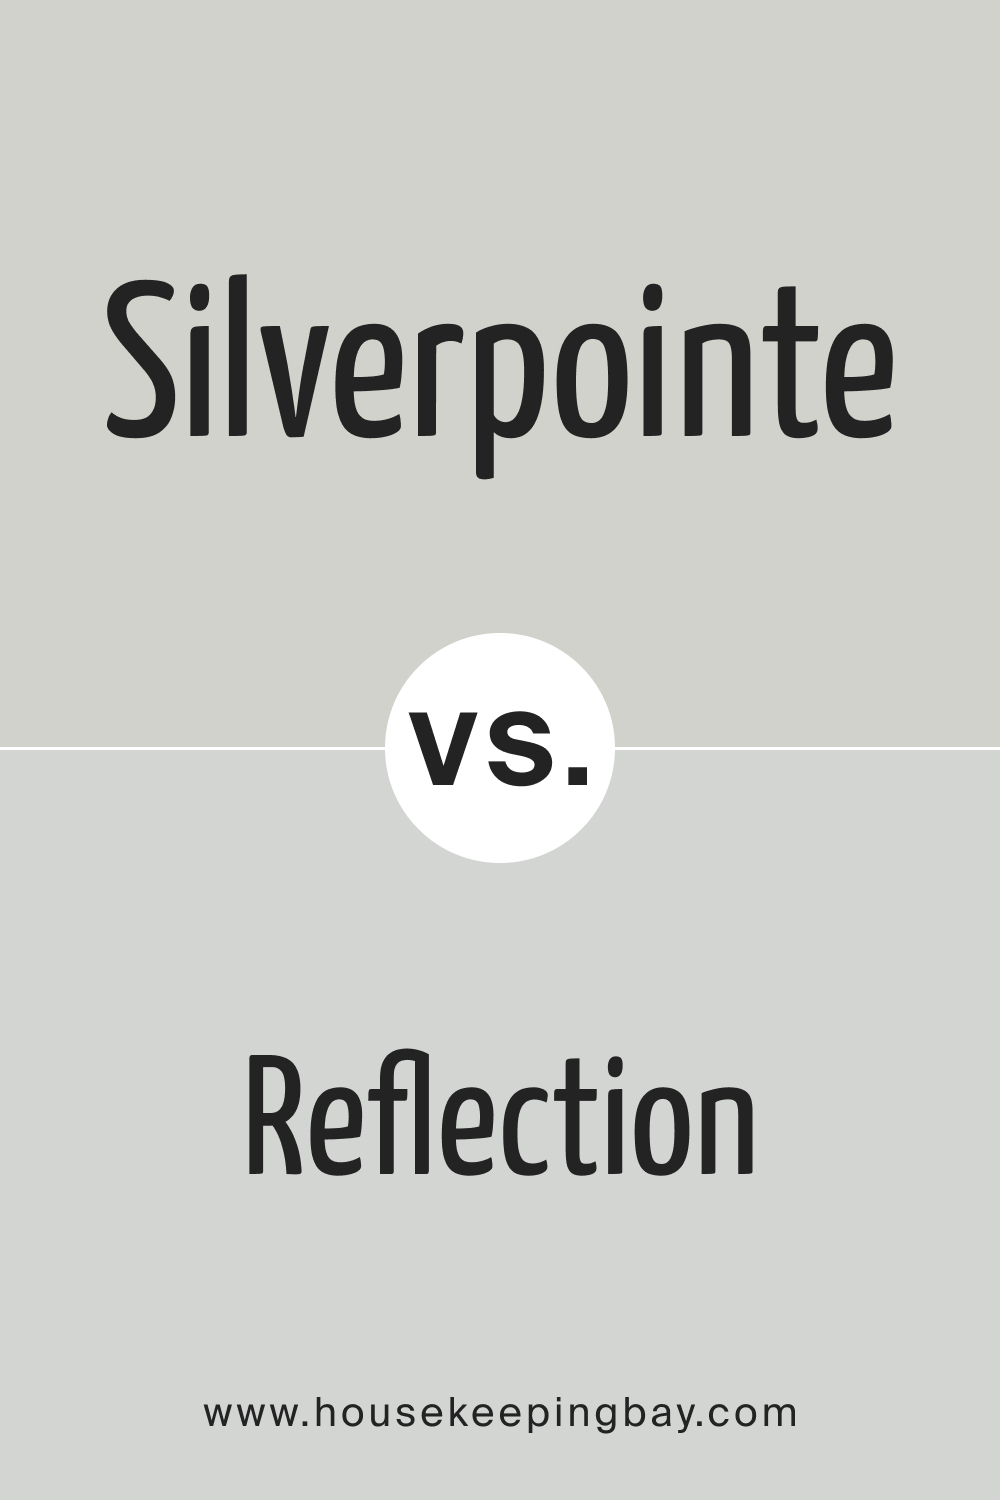 SW Silverpointe vs Reflection